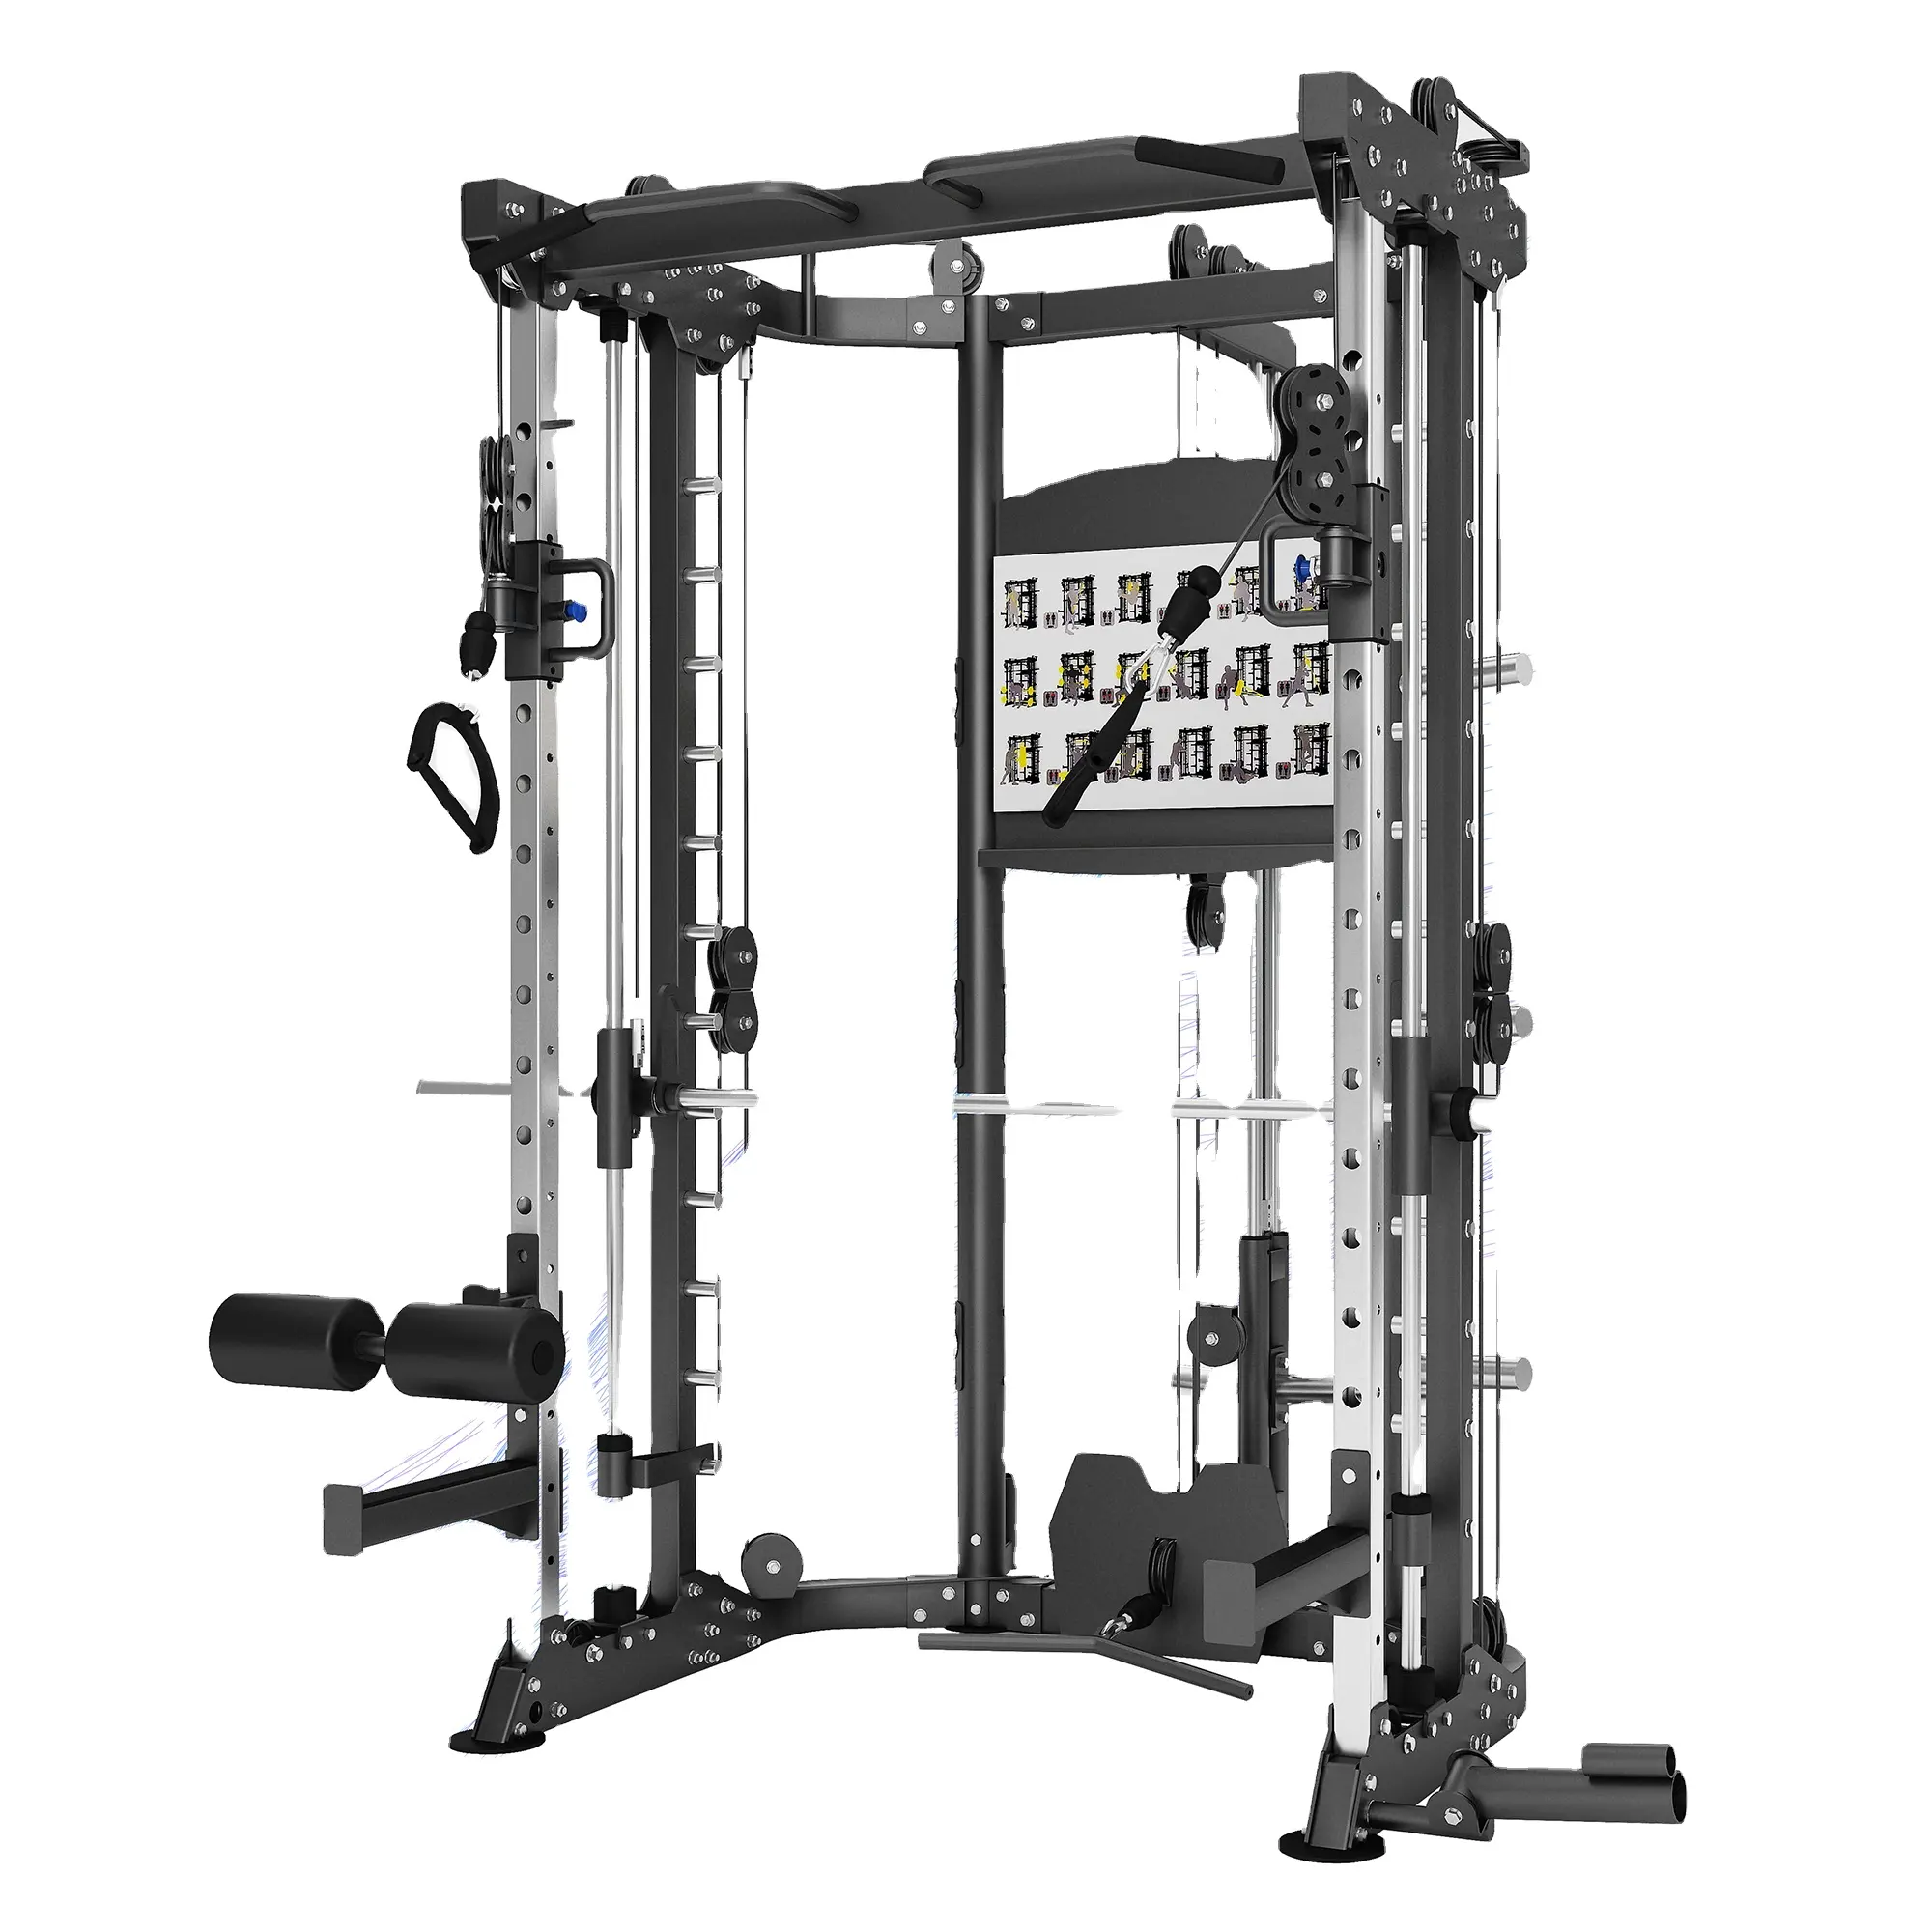 Productos populares Gym Smith Machine Fitness Equipment Muti Functional Smith Machine con buen servicio